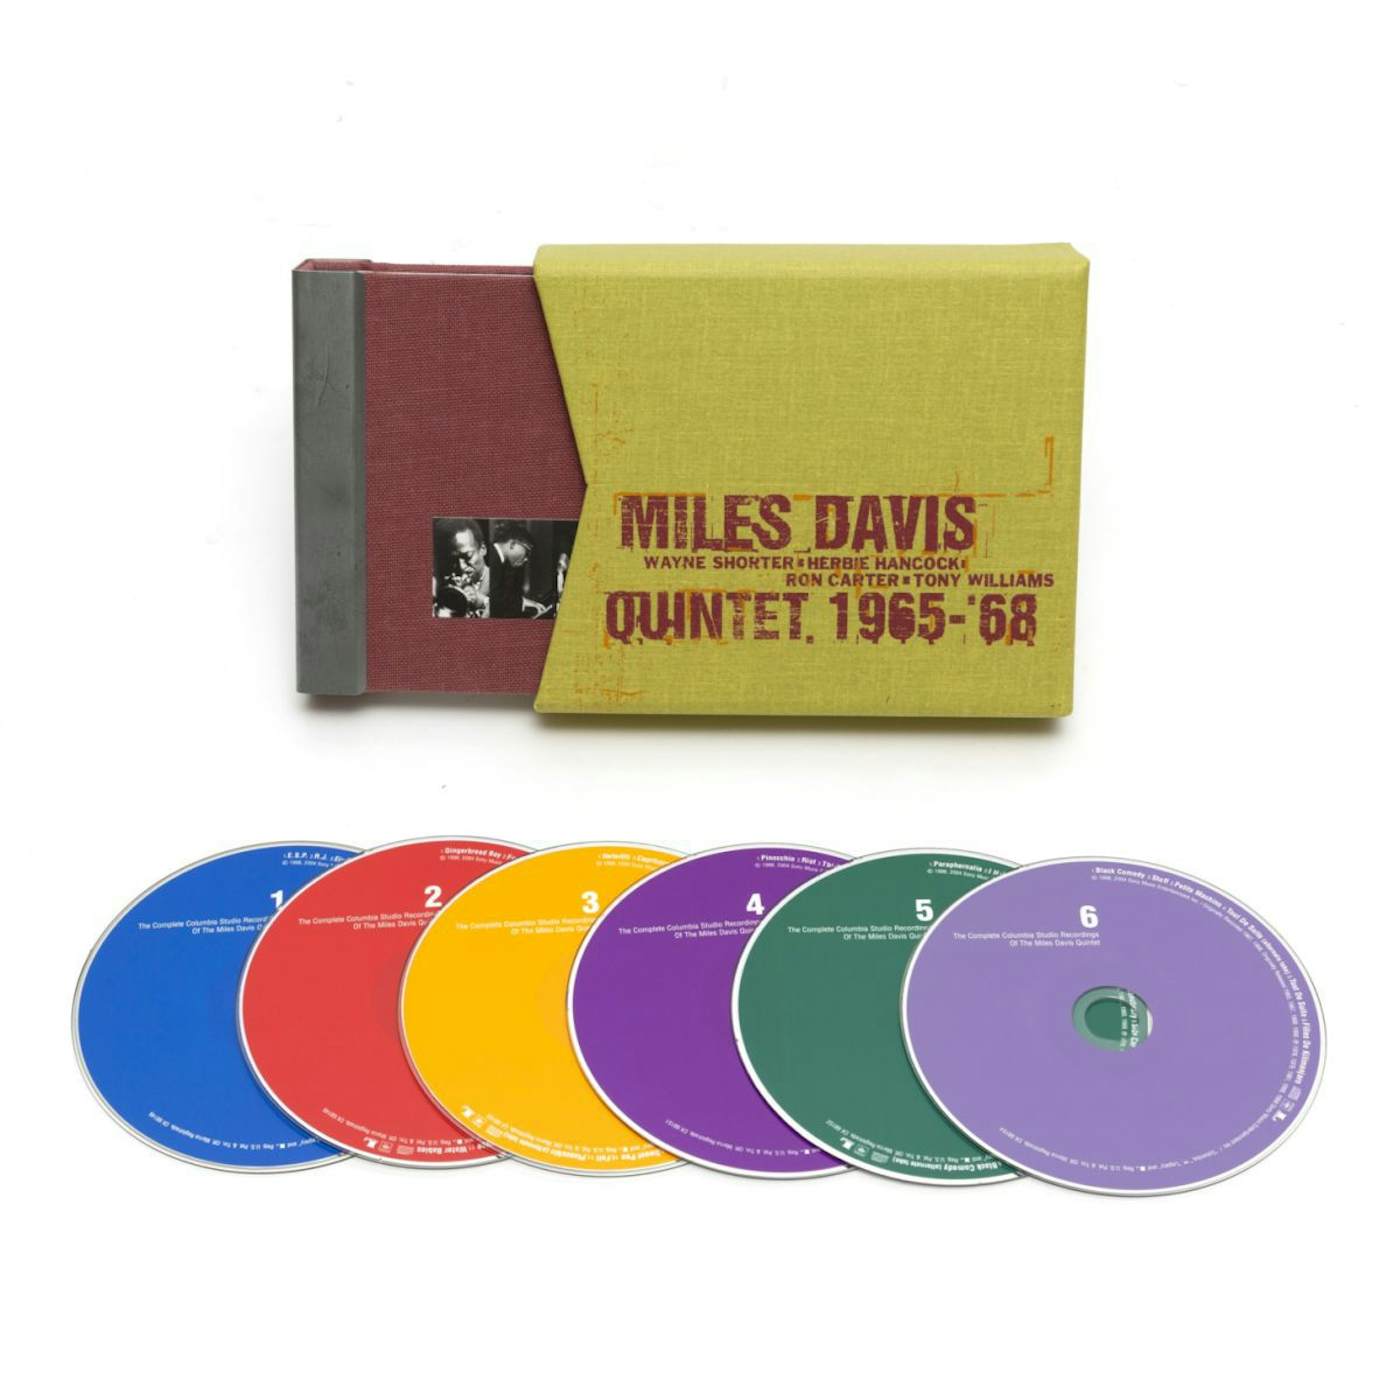 The Complete Columbia Studio Recordings Of The Miles Davis Quintet